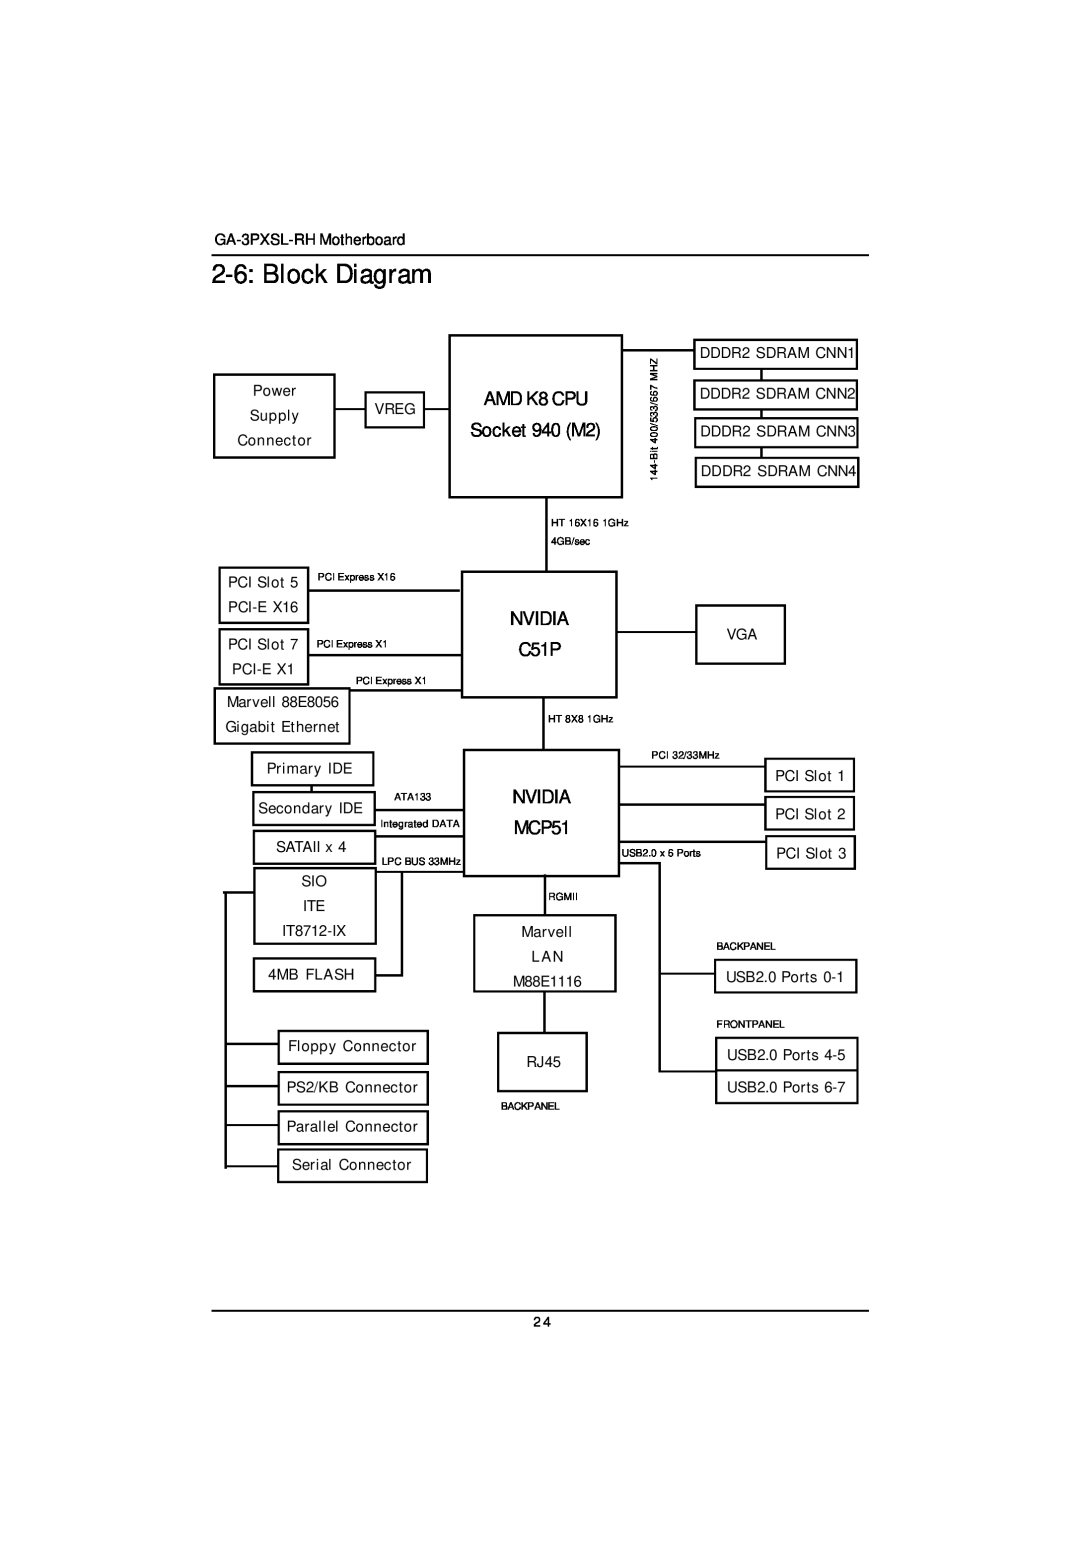 Gigabyte GA-3PXSL-RH user manual Block Diagram, AMD K8 CPU Socket 940 M2, Nvidia, C51P, NVIDIA MCP51 